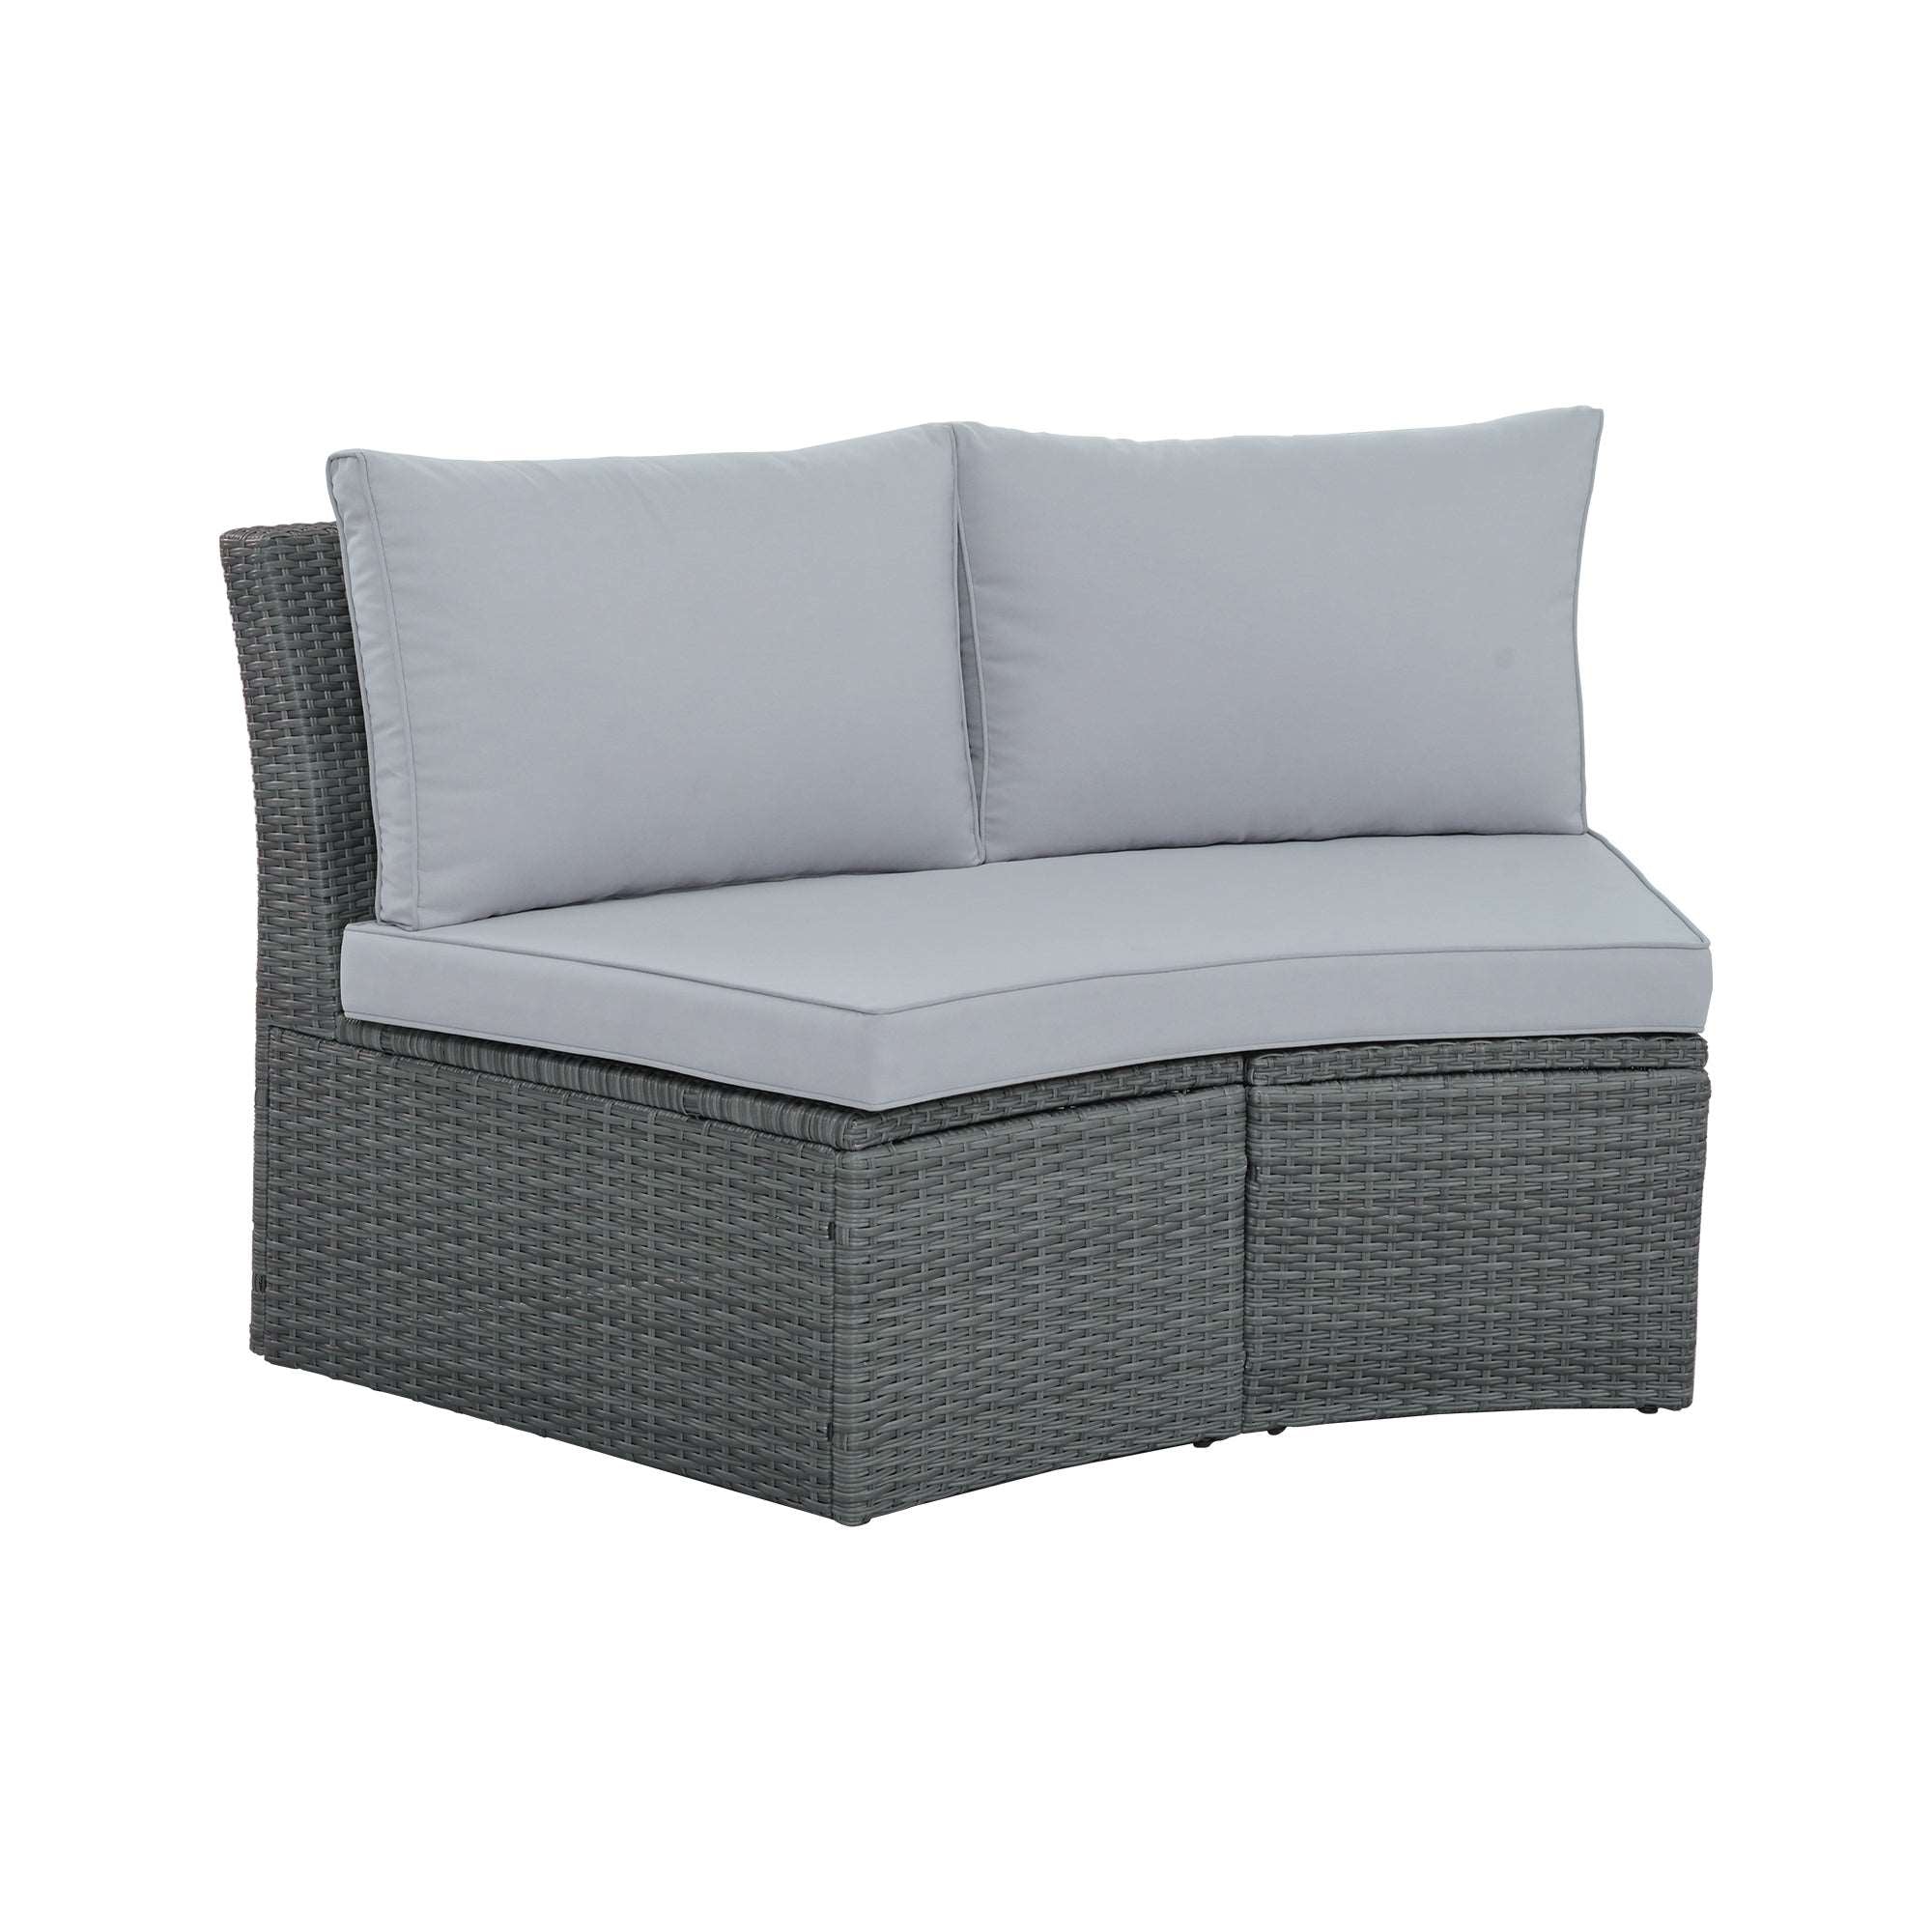 Bellemave 10-Piece Outdoor Sectional Half Round Patio Rattan Sofa Set, PE Wicker Conversation Furniture Set